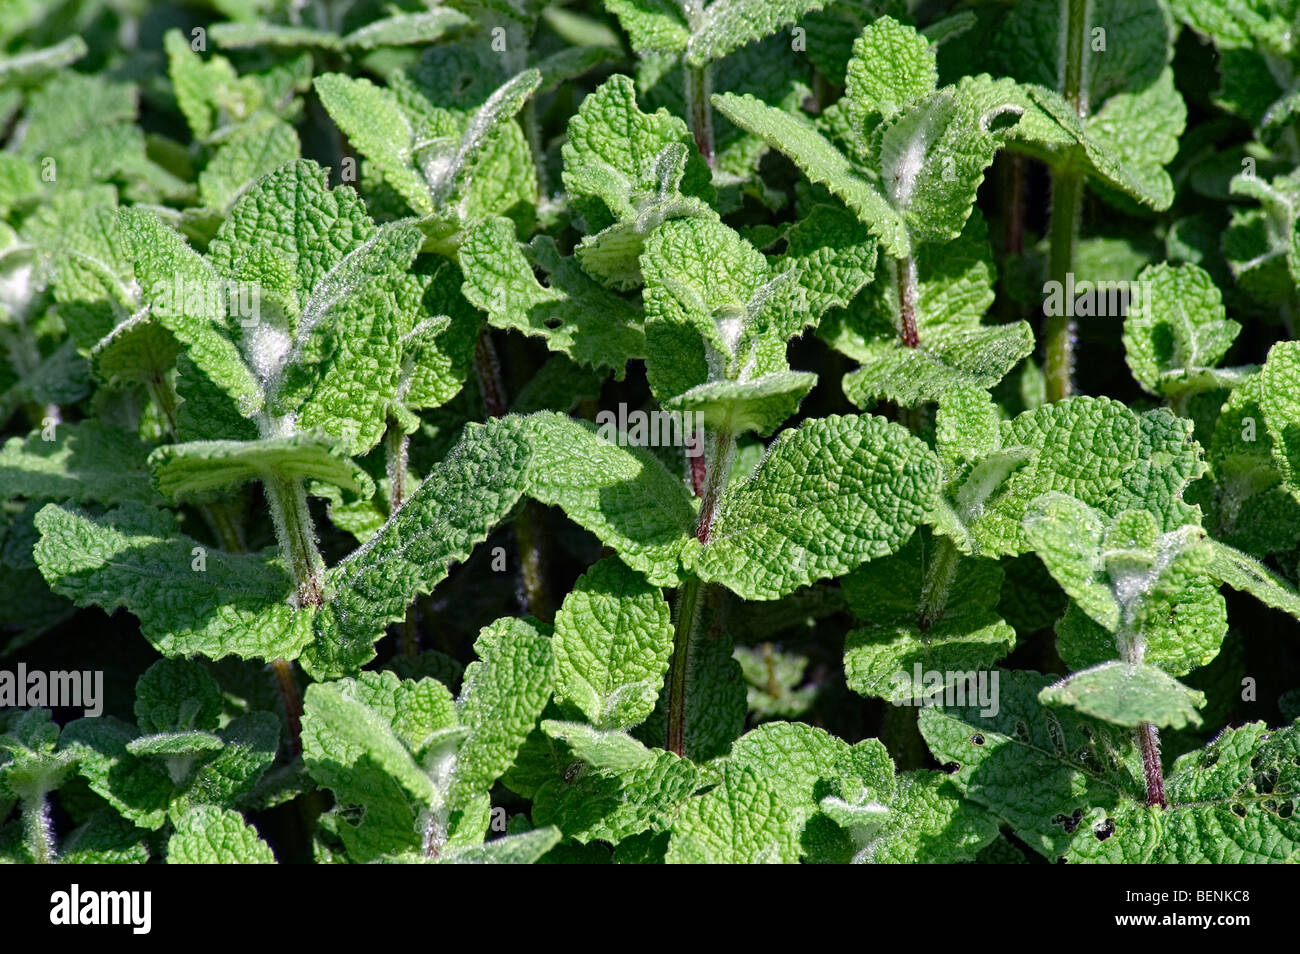 Apple mint / woolly mint / round-leafed mint (Mentha suaveolens / Mentha rotundifolia) Stock Photo